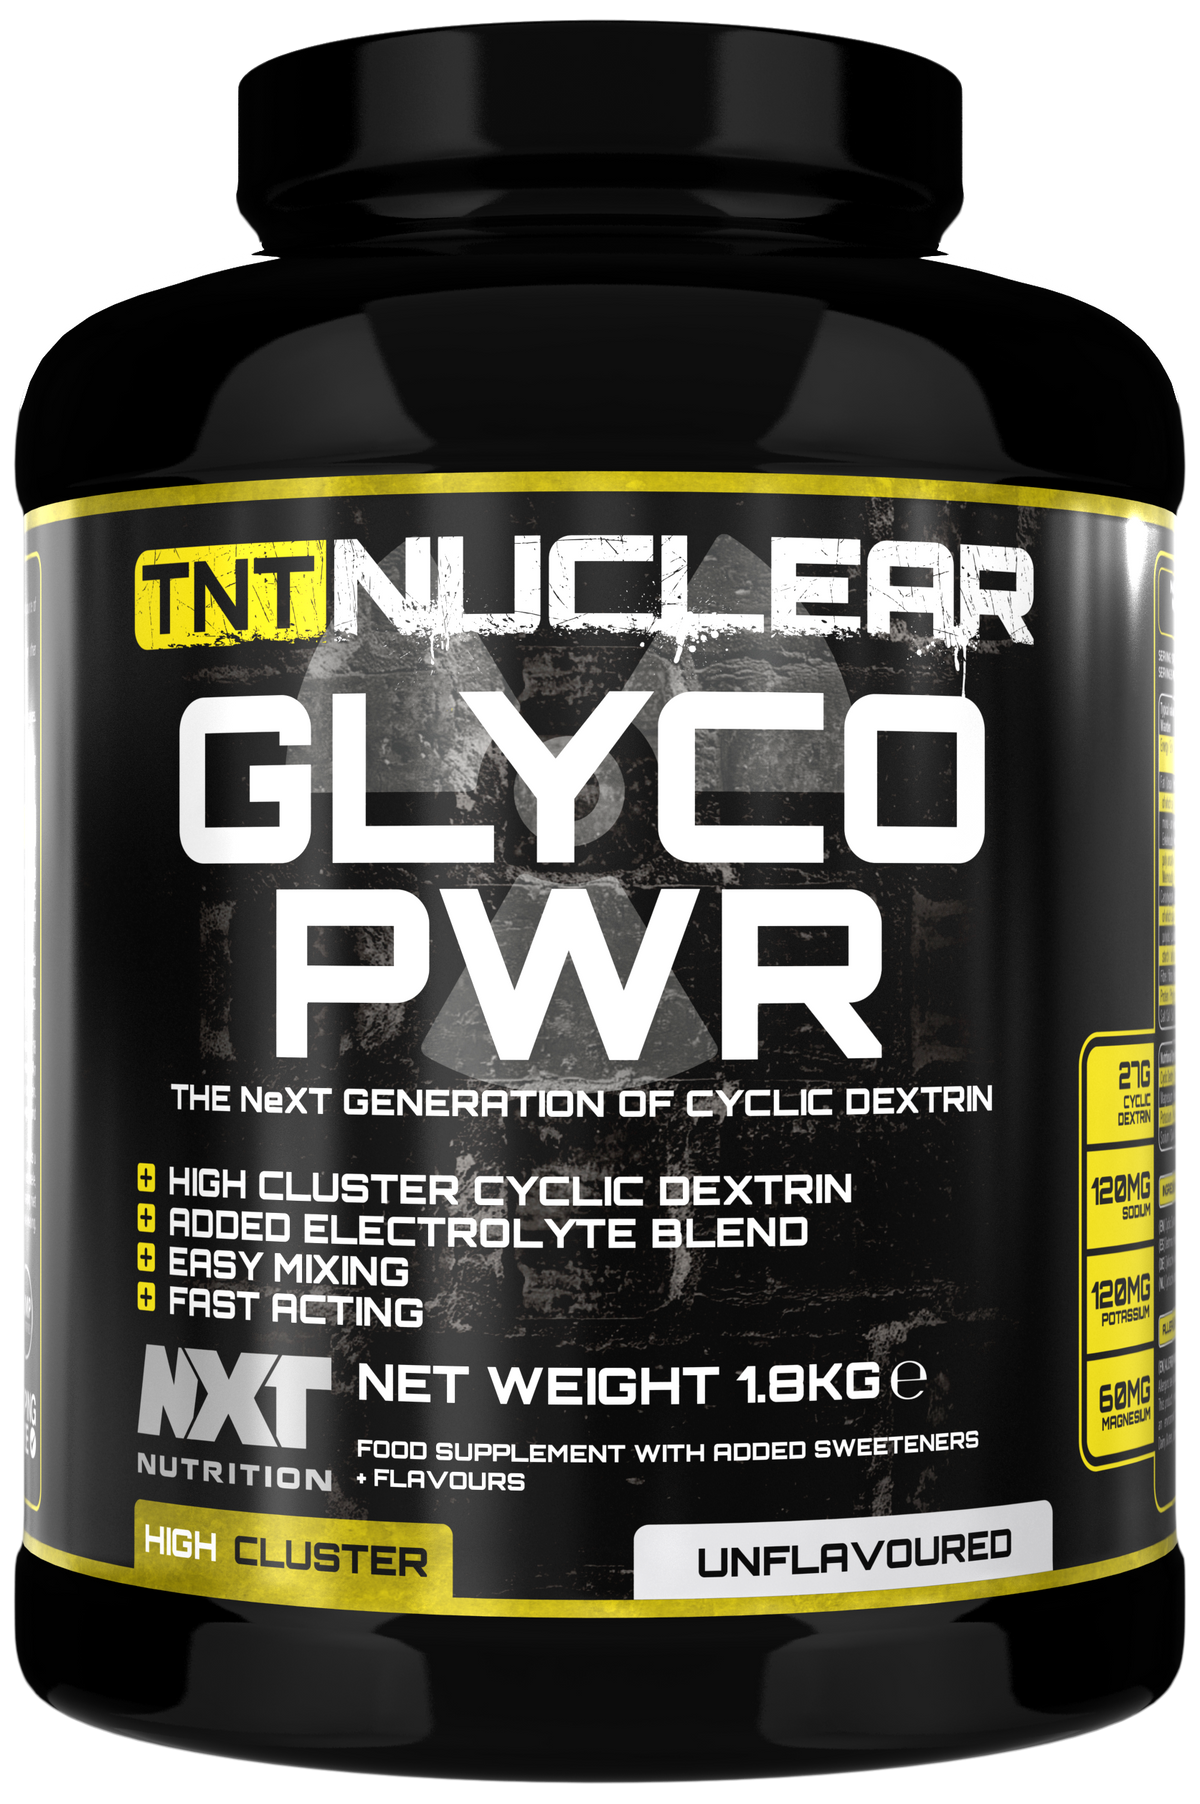 TNT Nuclear Glyco PWR 1.8kg